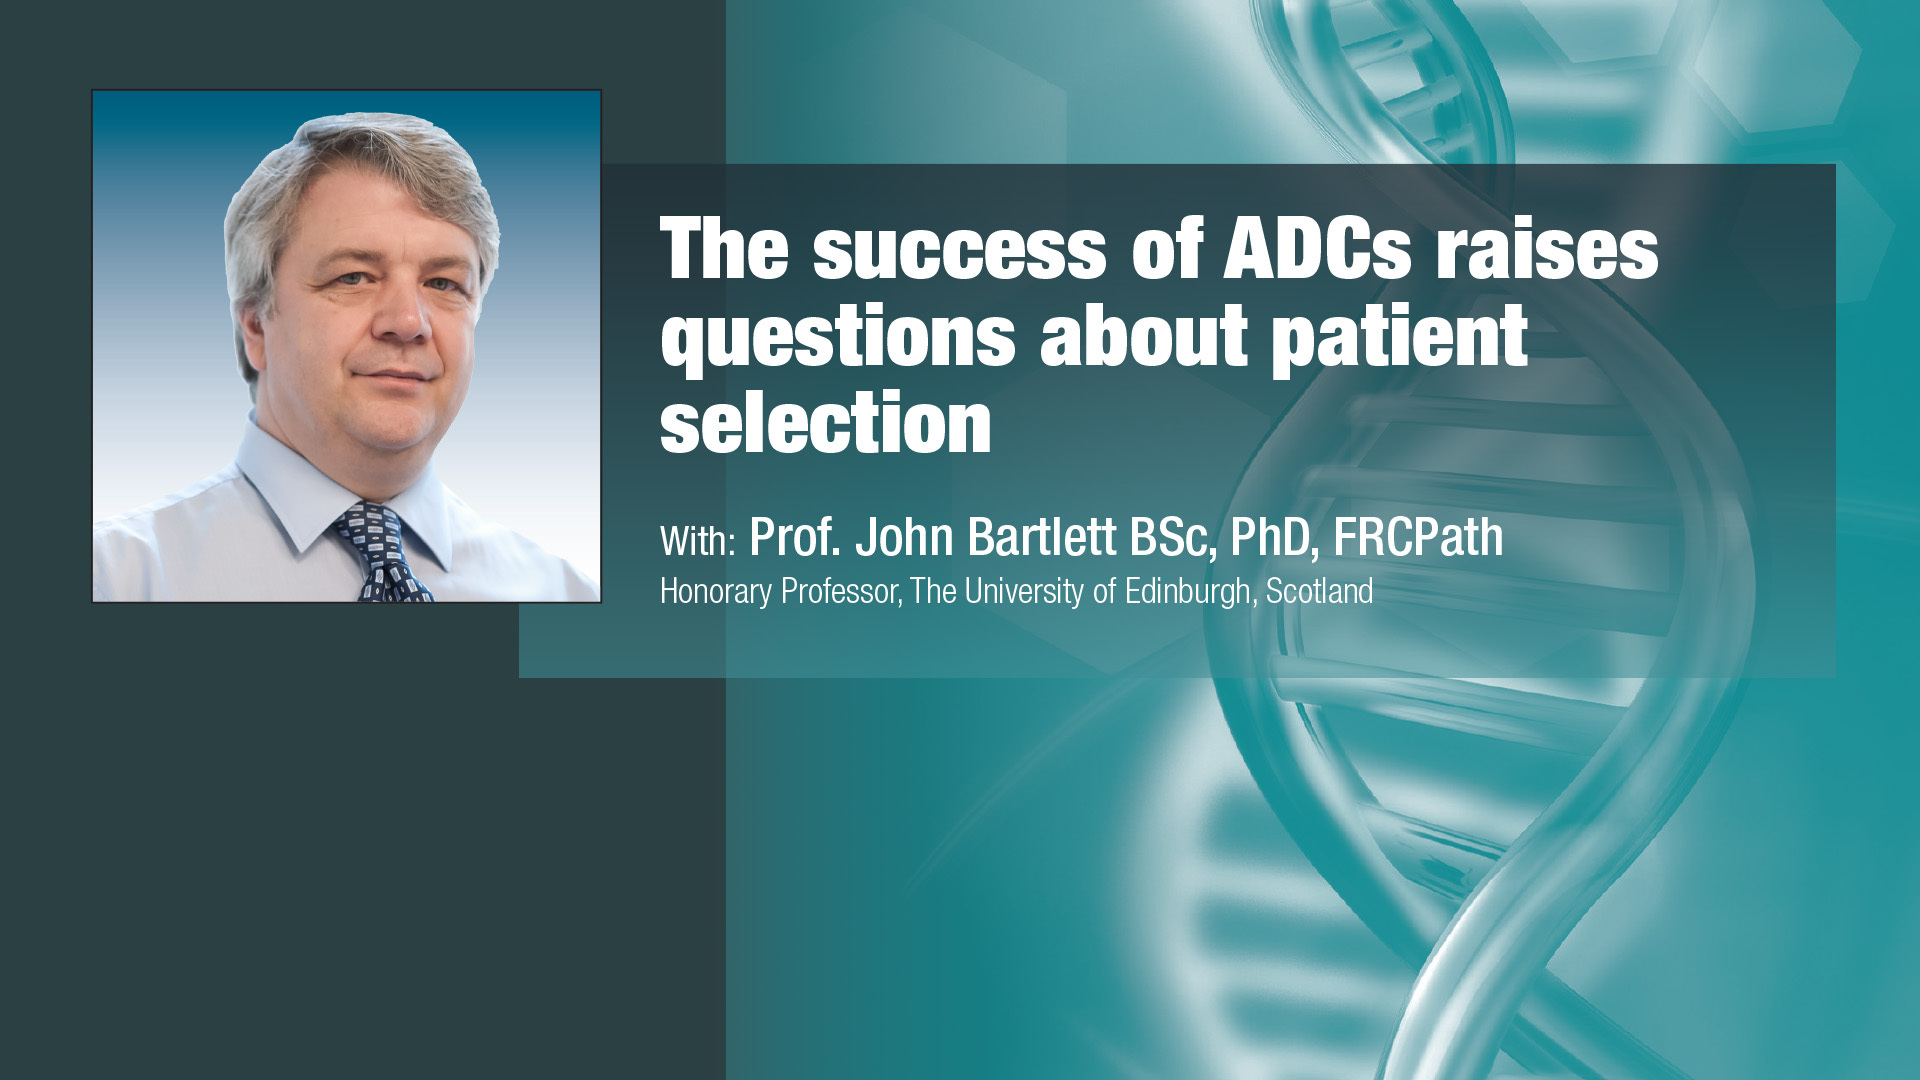 The success of ADCs raises questions about patient selection